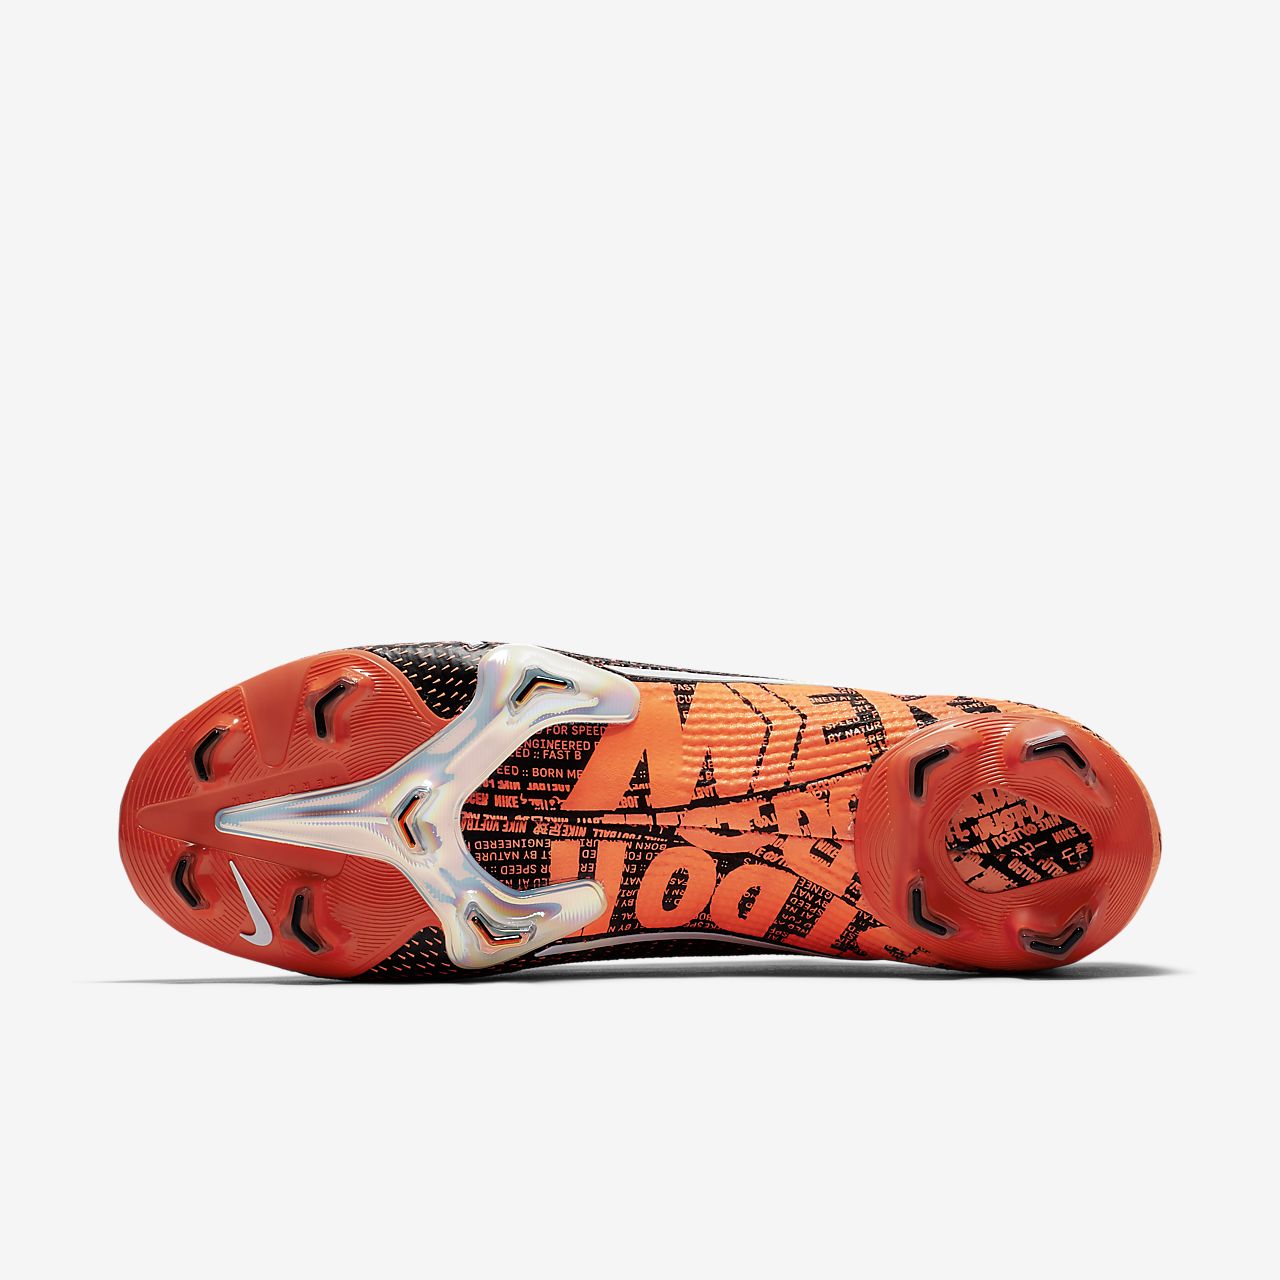 Nike Mercurial Vapor Iv Fg Orange Peel Size 11 Us WorthPoint